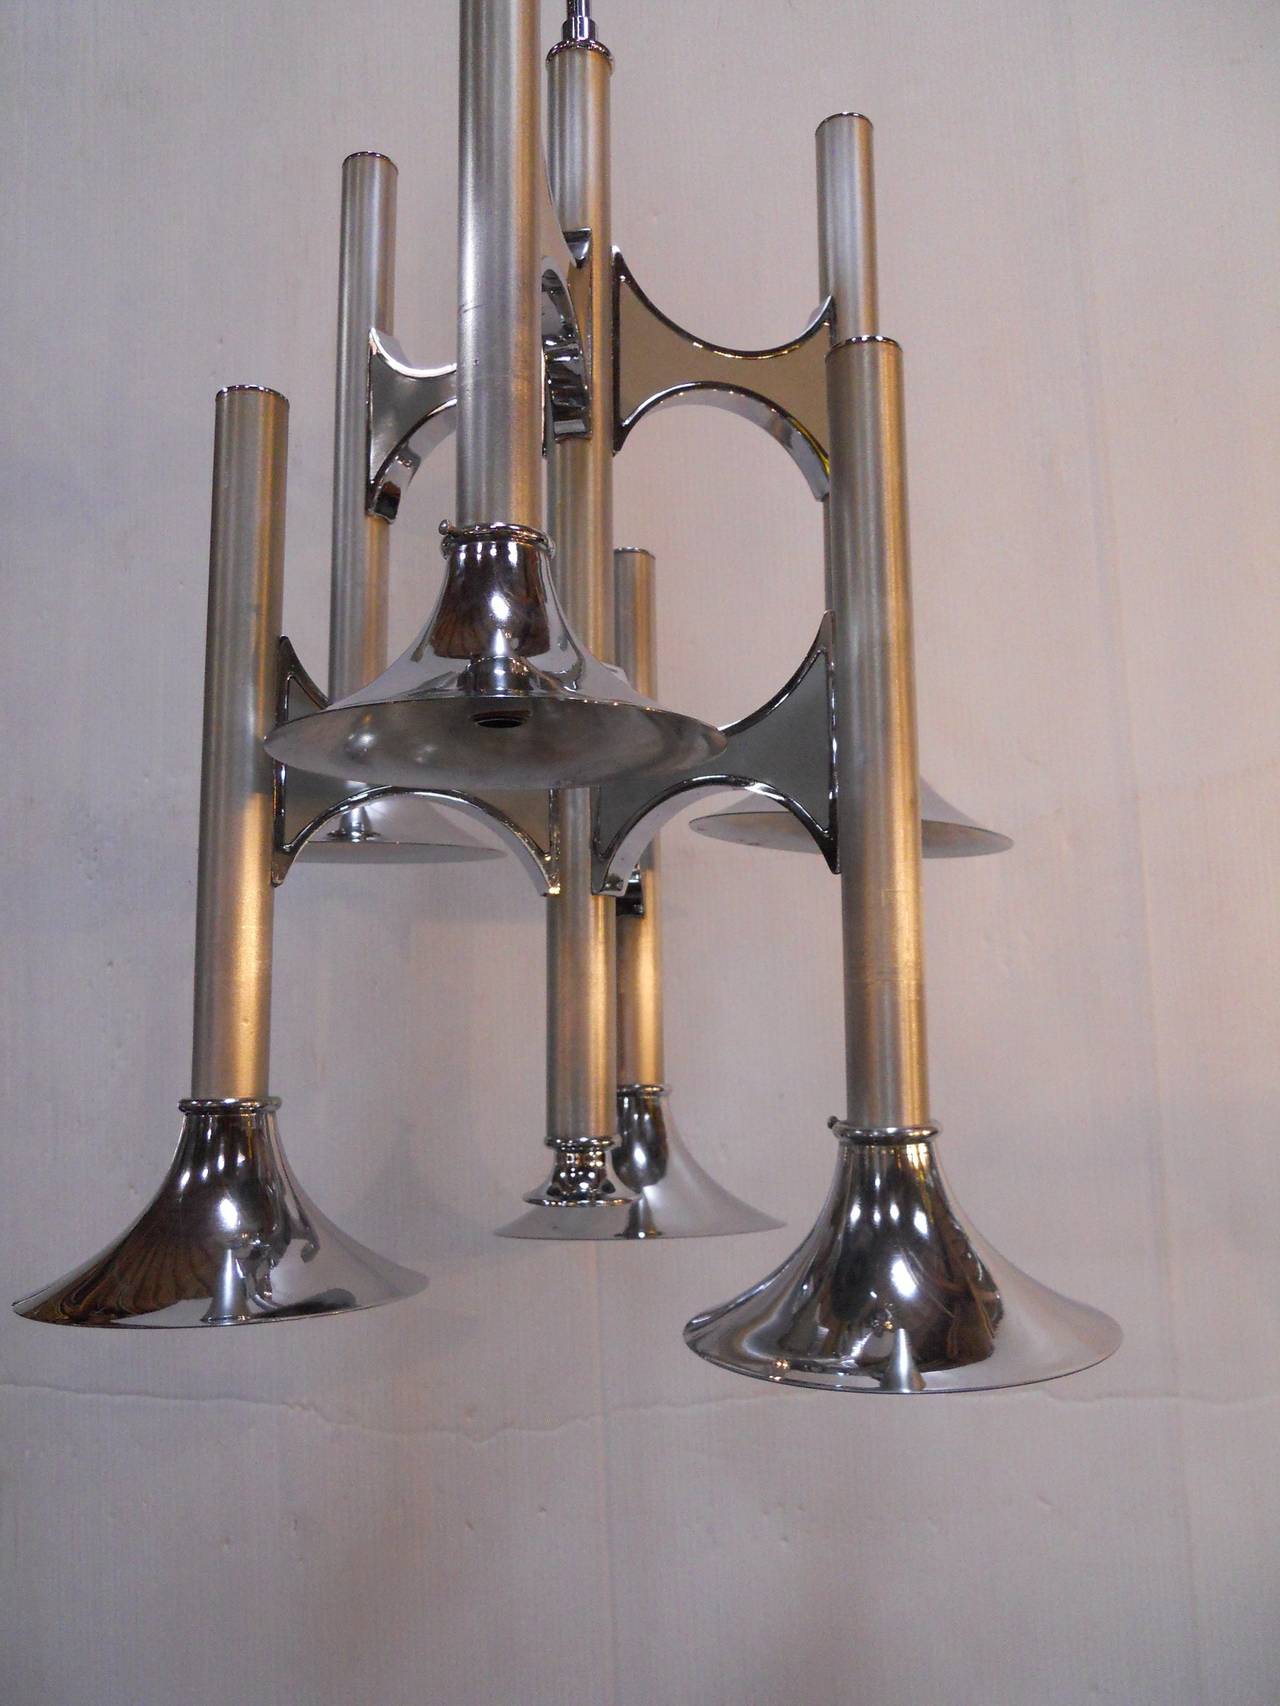 Sciolari Trumpet Chandelier 
6 lights